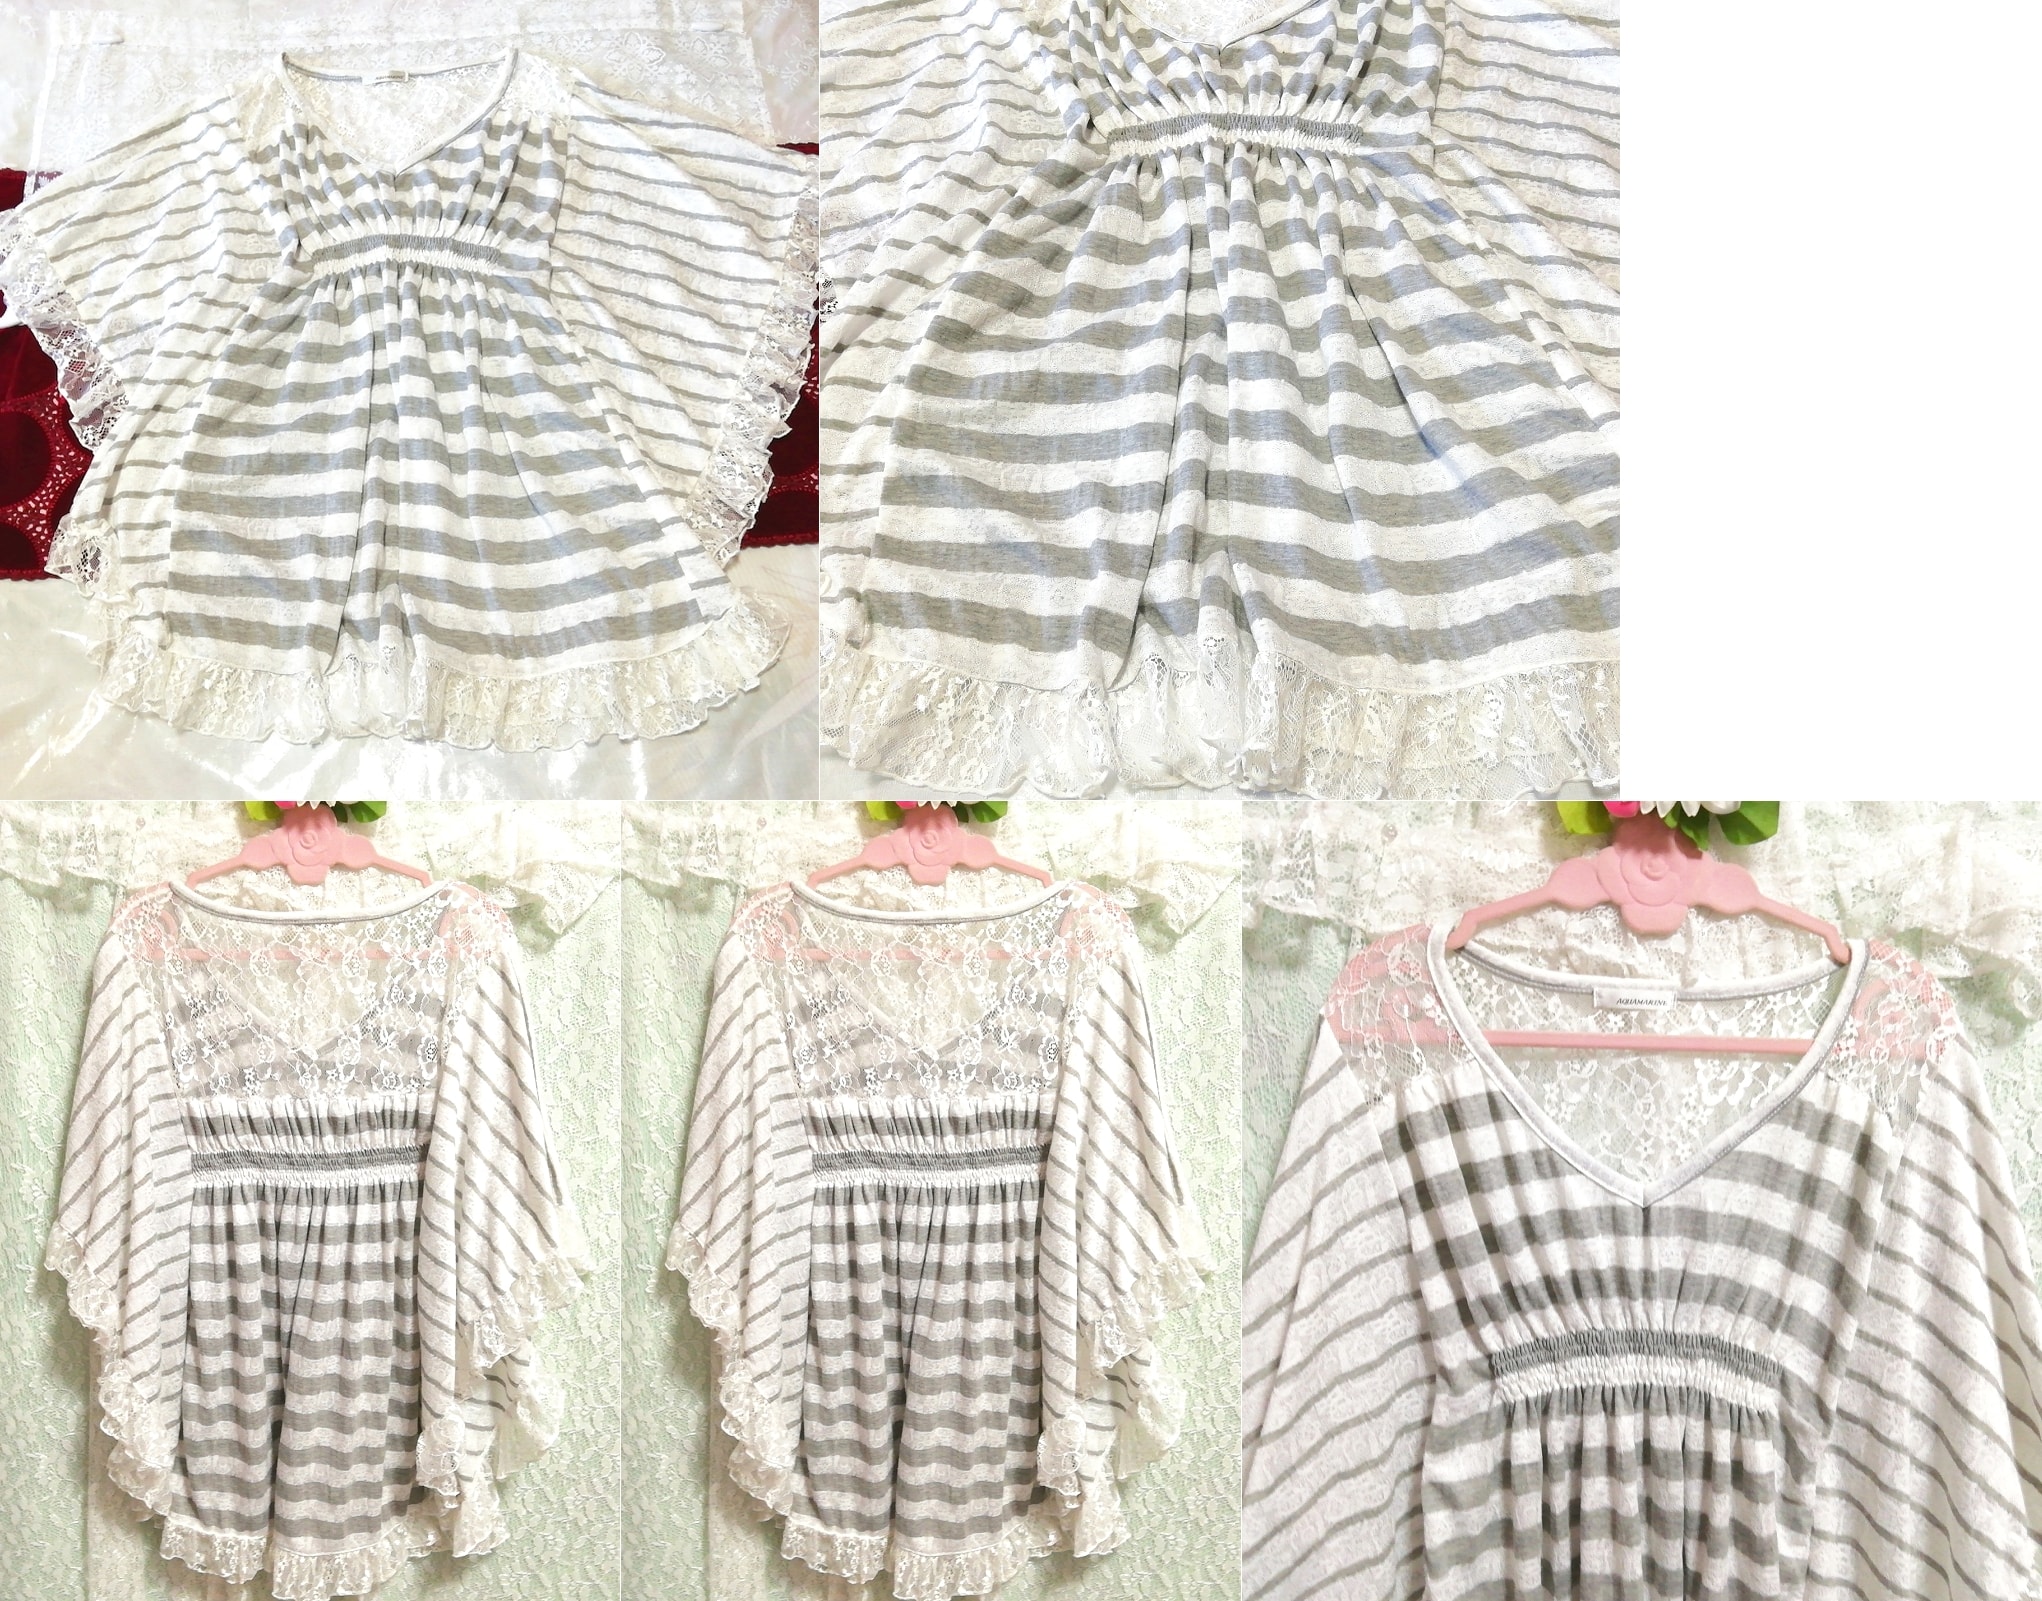 Gray striped pattern white lace poncho tunic negligee nightgown nightwear dress, tunic, long sleeve, m size